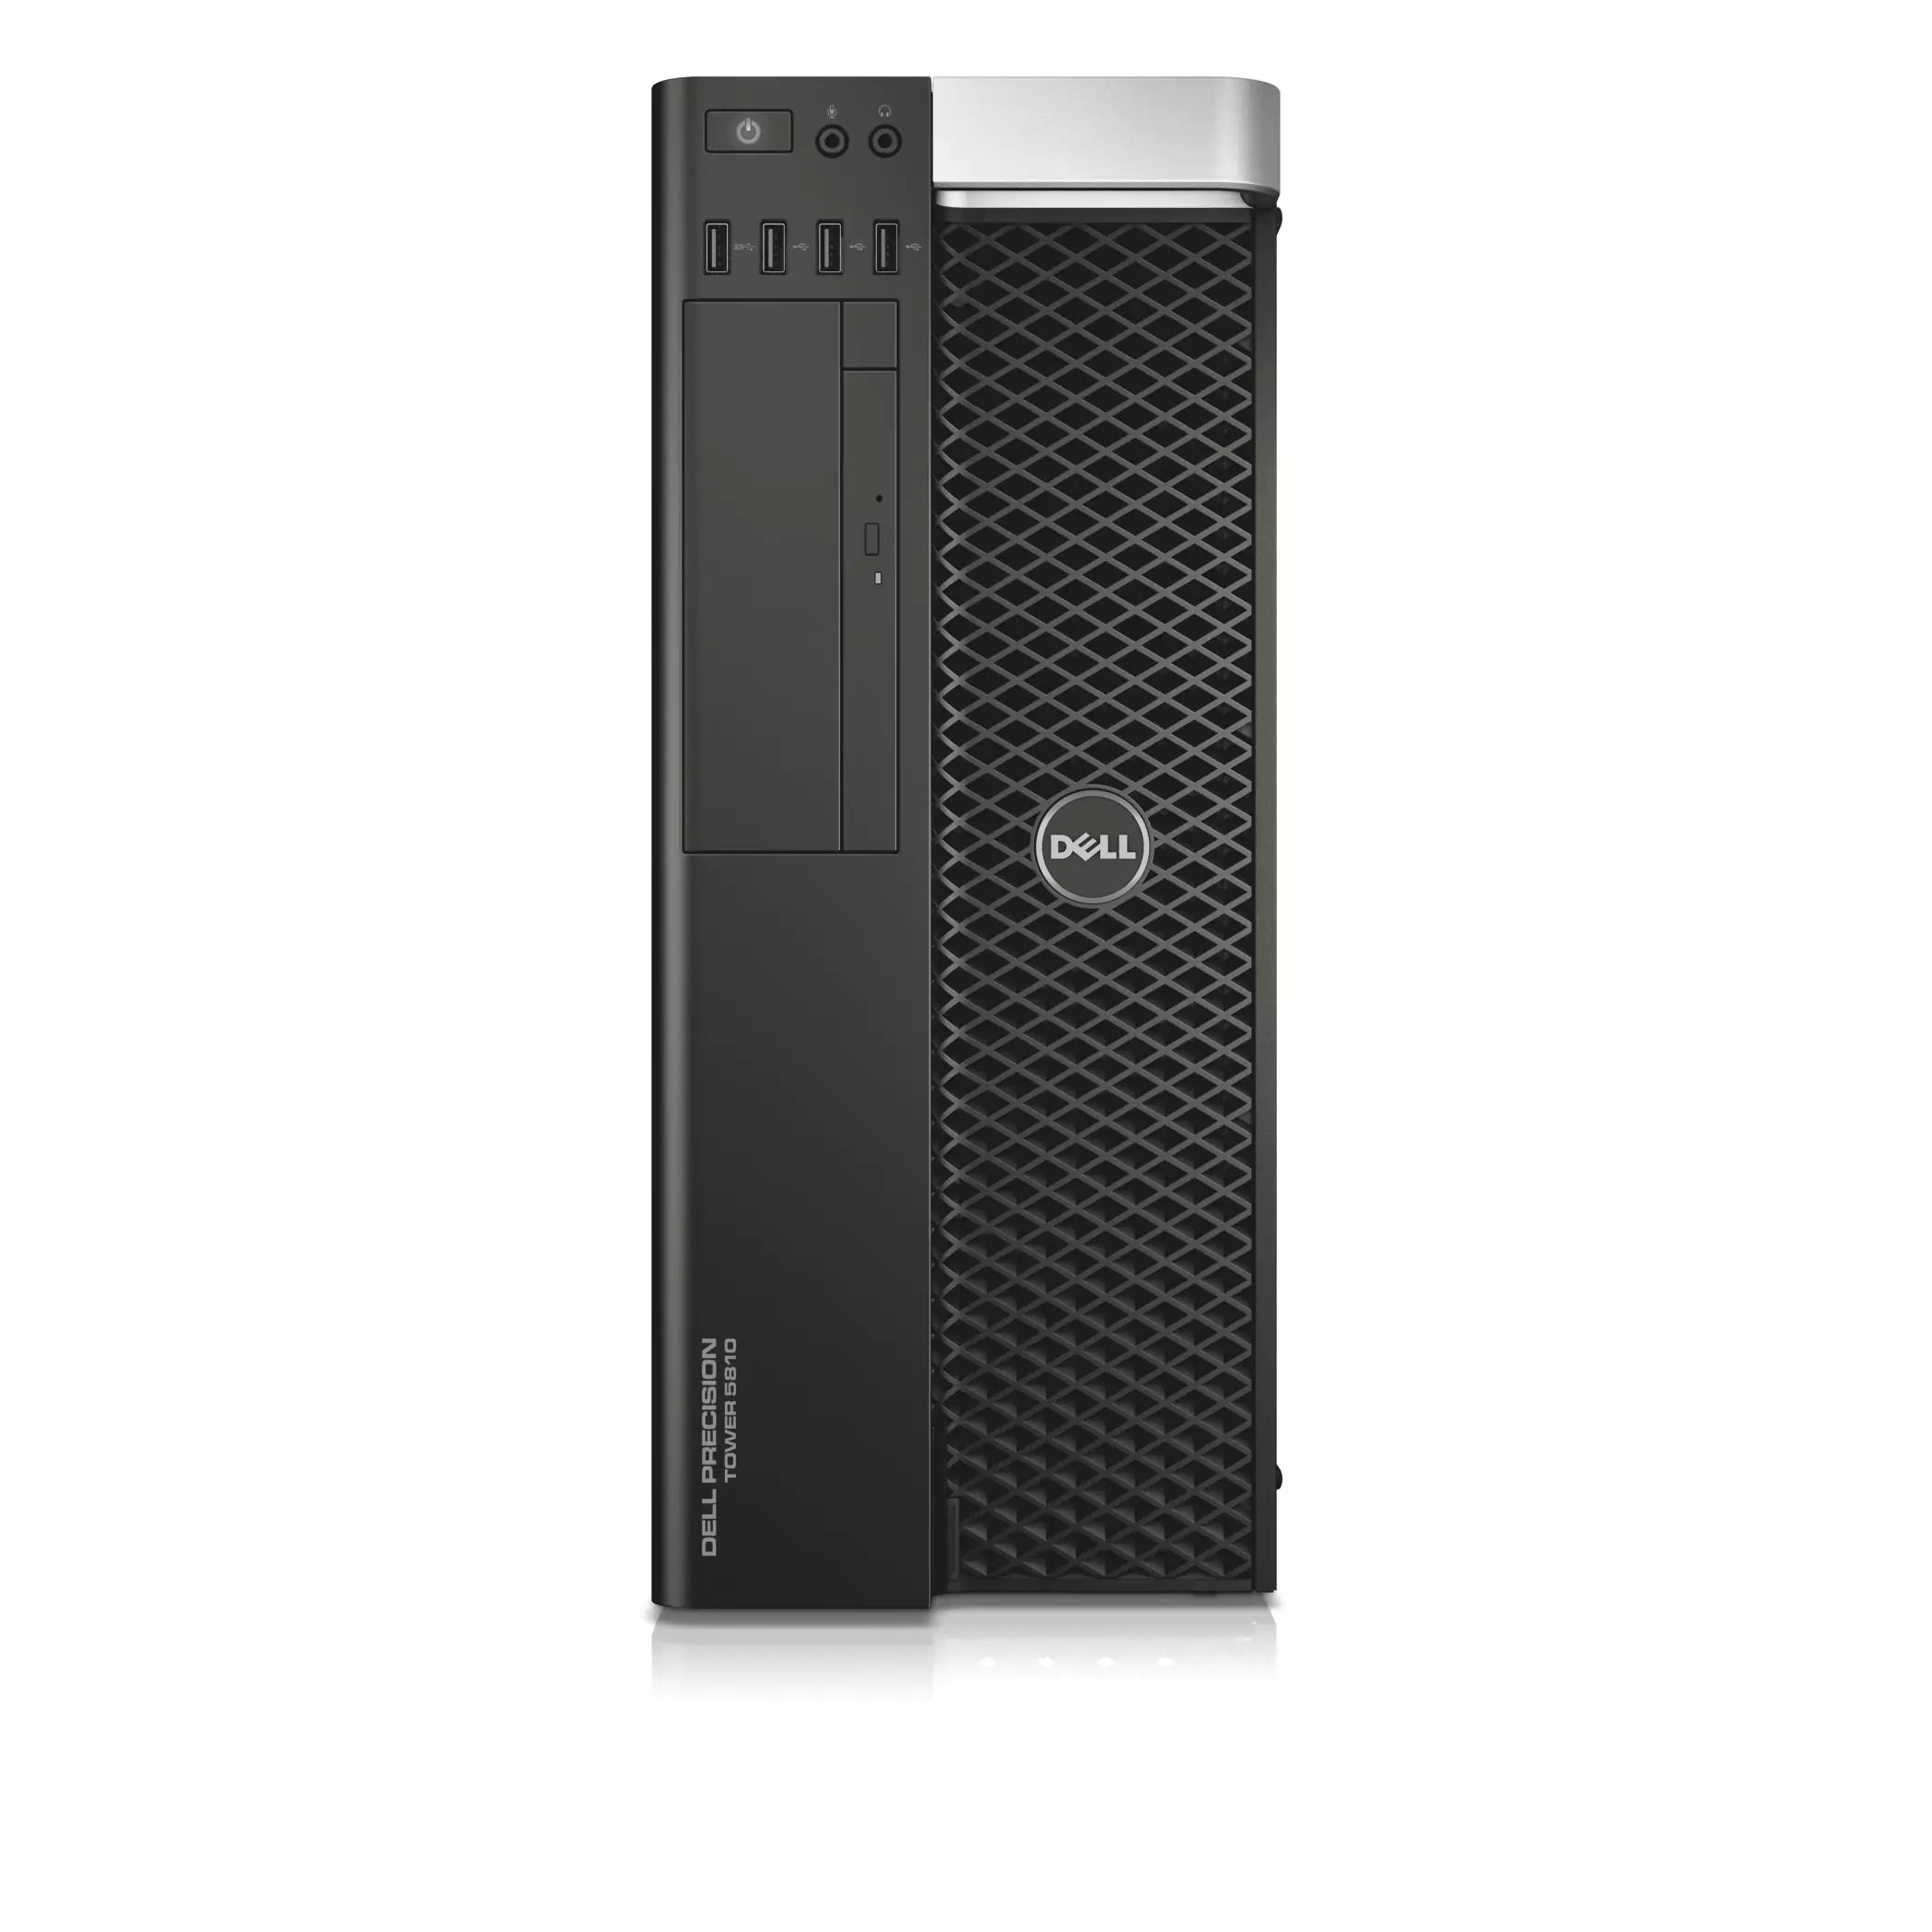 Dell Precision T5810 Tower-Workstation-Paket | Intel Xeon E5-1620 V3 | Nvidia GTX 1650 | Dell UltraSharp U2713HM 27